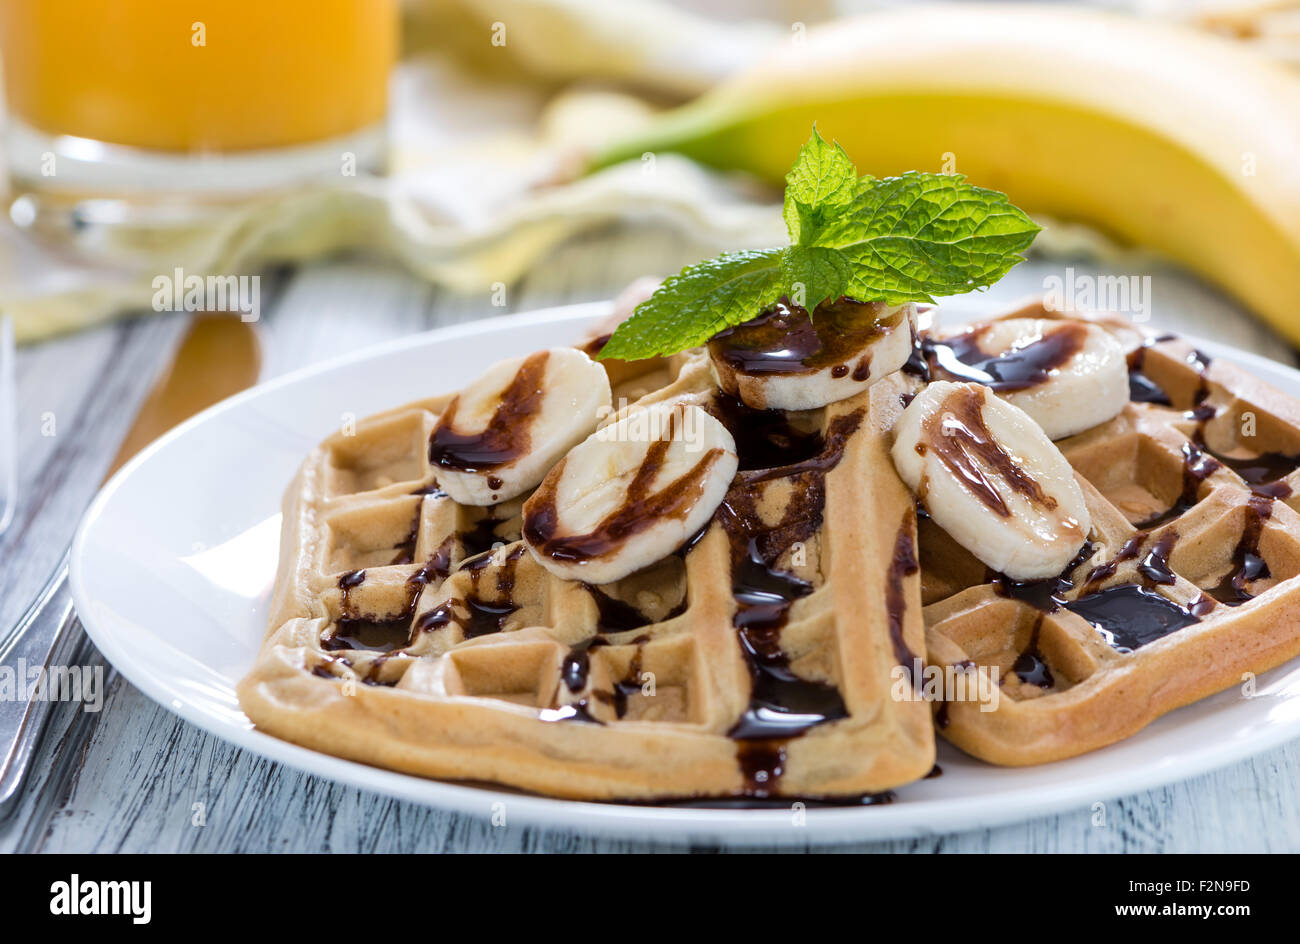 Sweet Breakfast (Waffles with Bananas and creamy Chocolate Sauce) Stock Photo